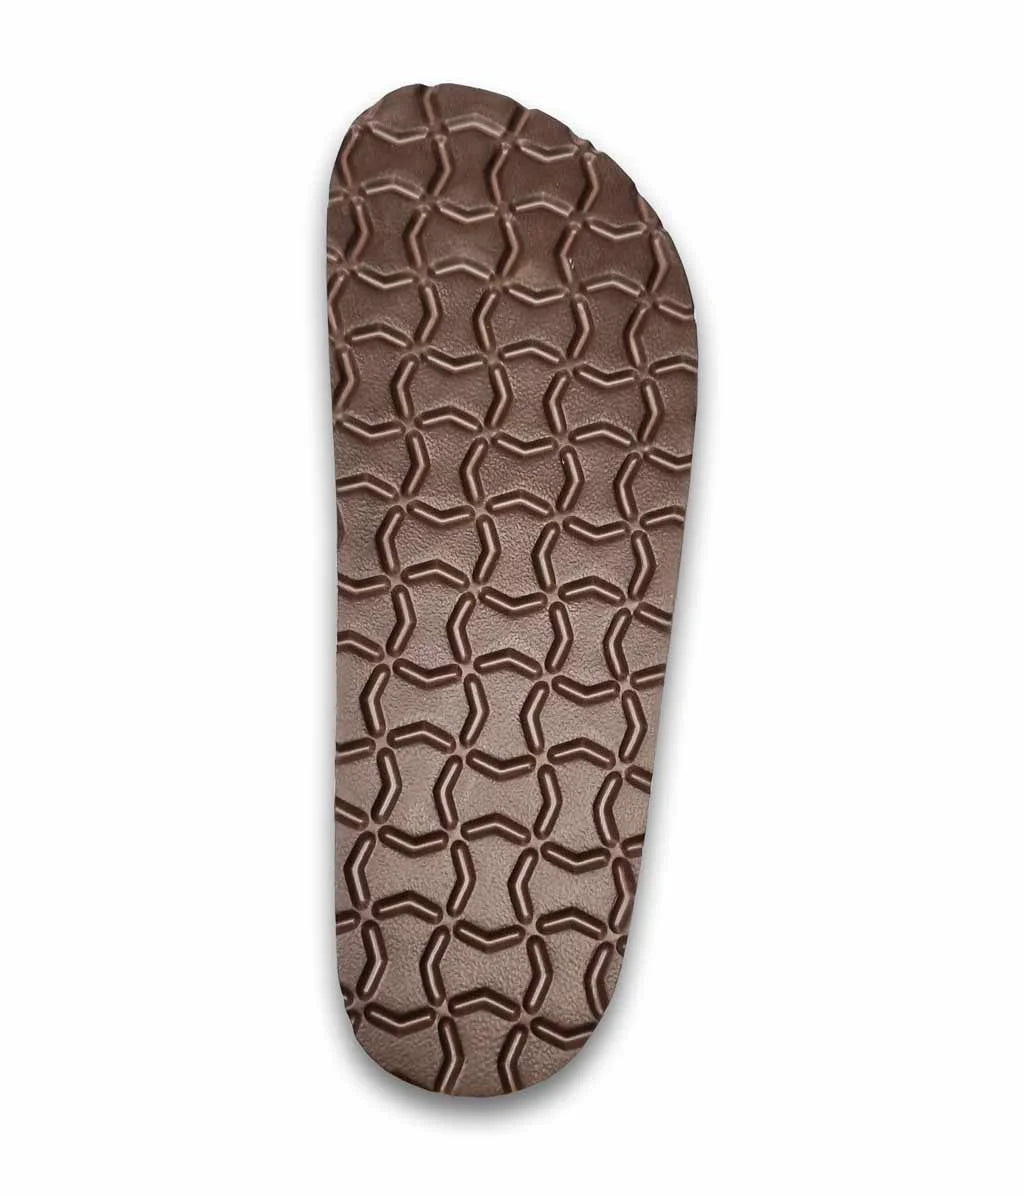 Premium brown cork sandals for men, combining style and comfort effortlessly